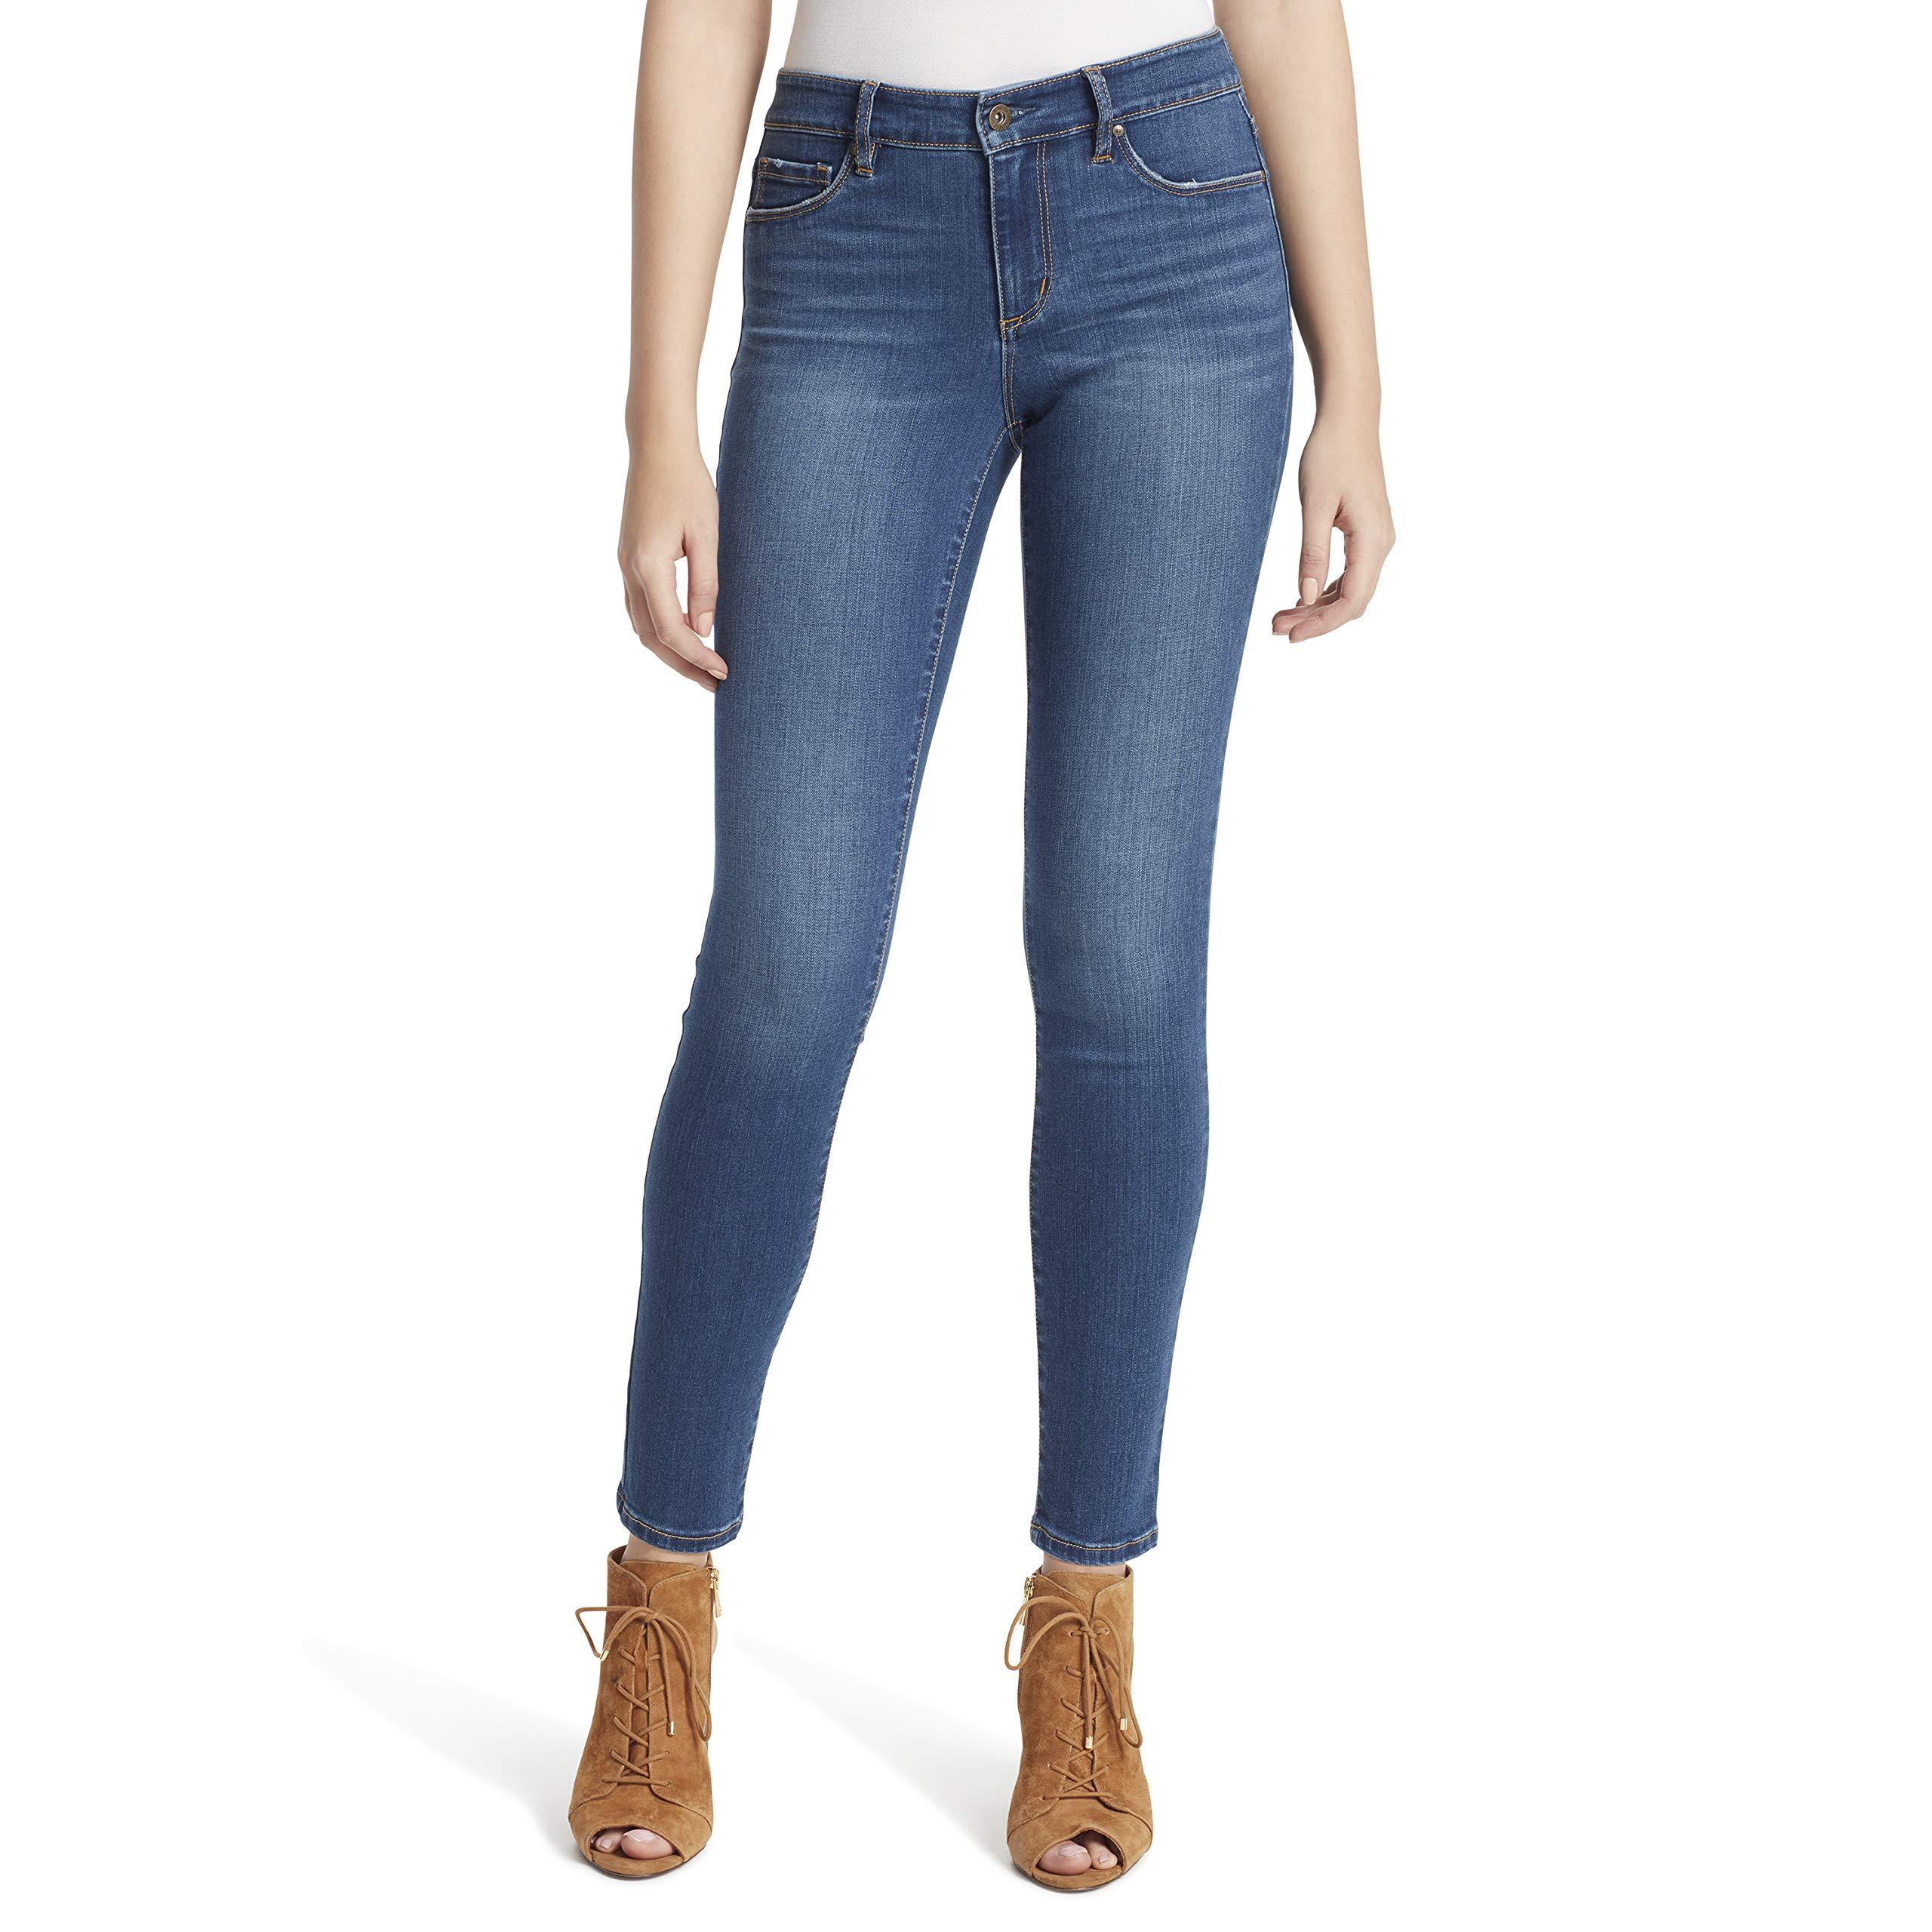 Jessica Simpson Denim Kiss Me Skinny Jeans in Blue - Lyst